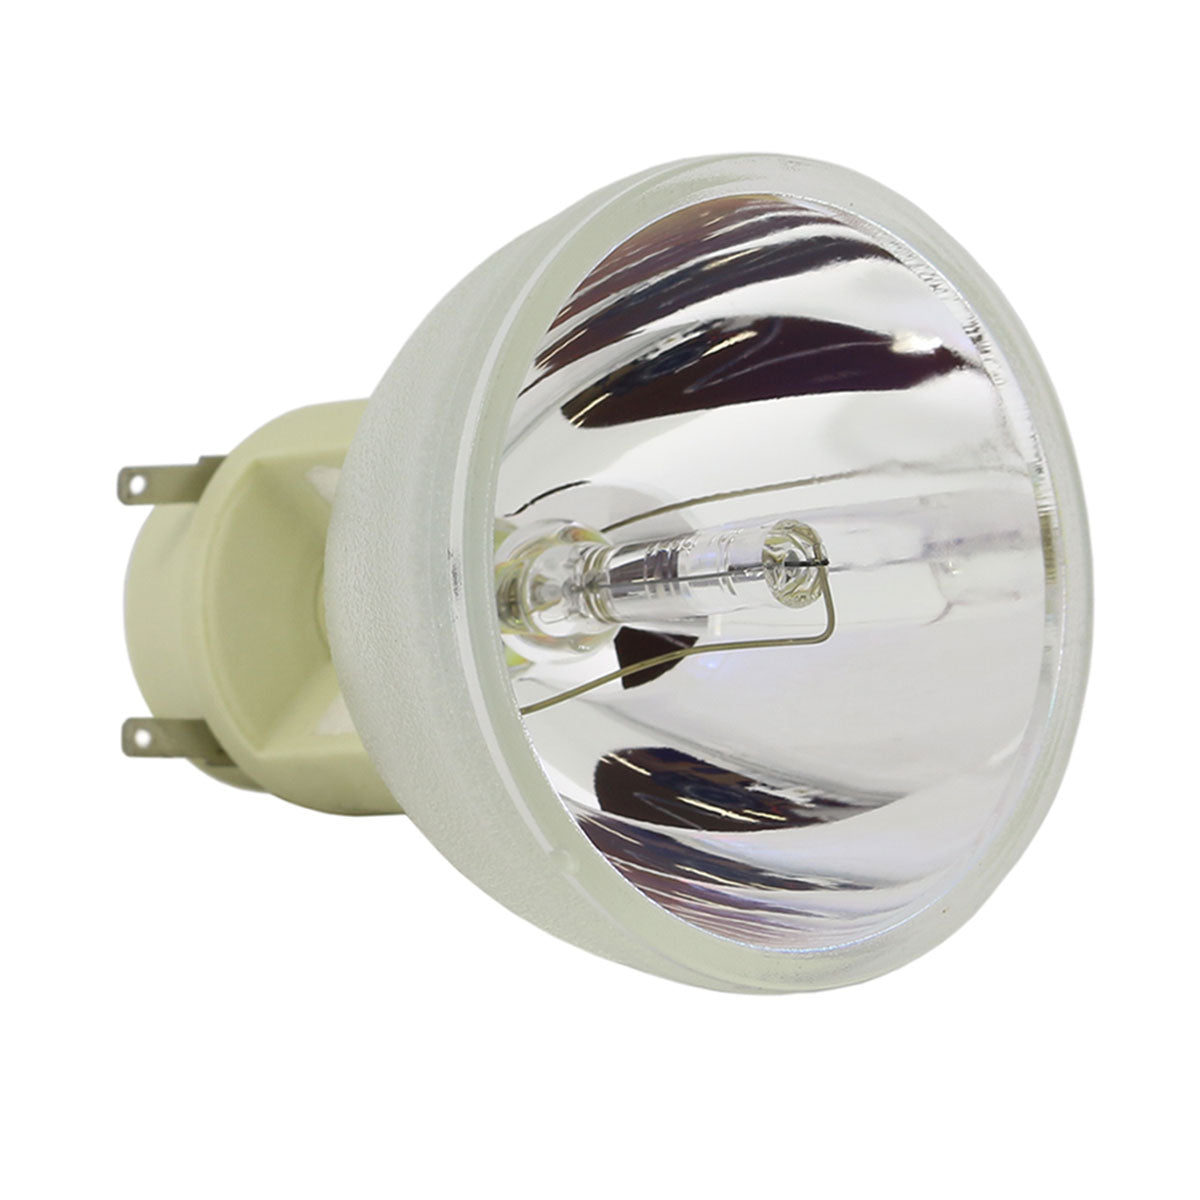 BenQ 5J.JD305.001 Osram Projector Bare Lamp